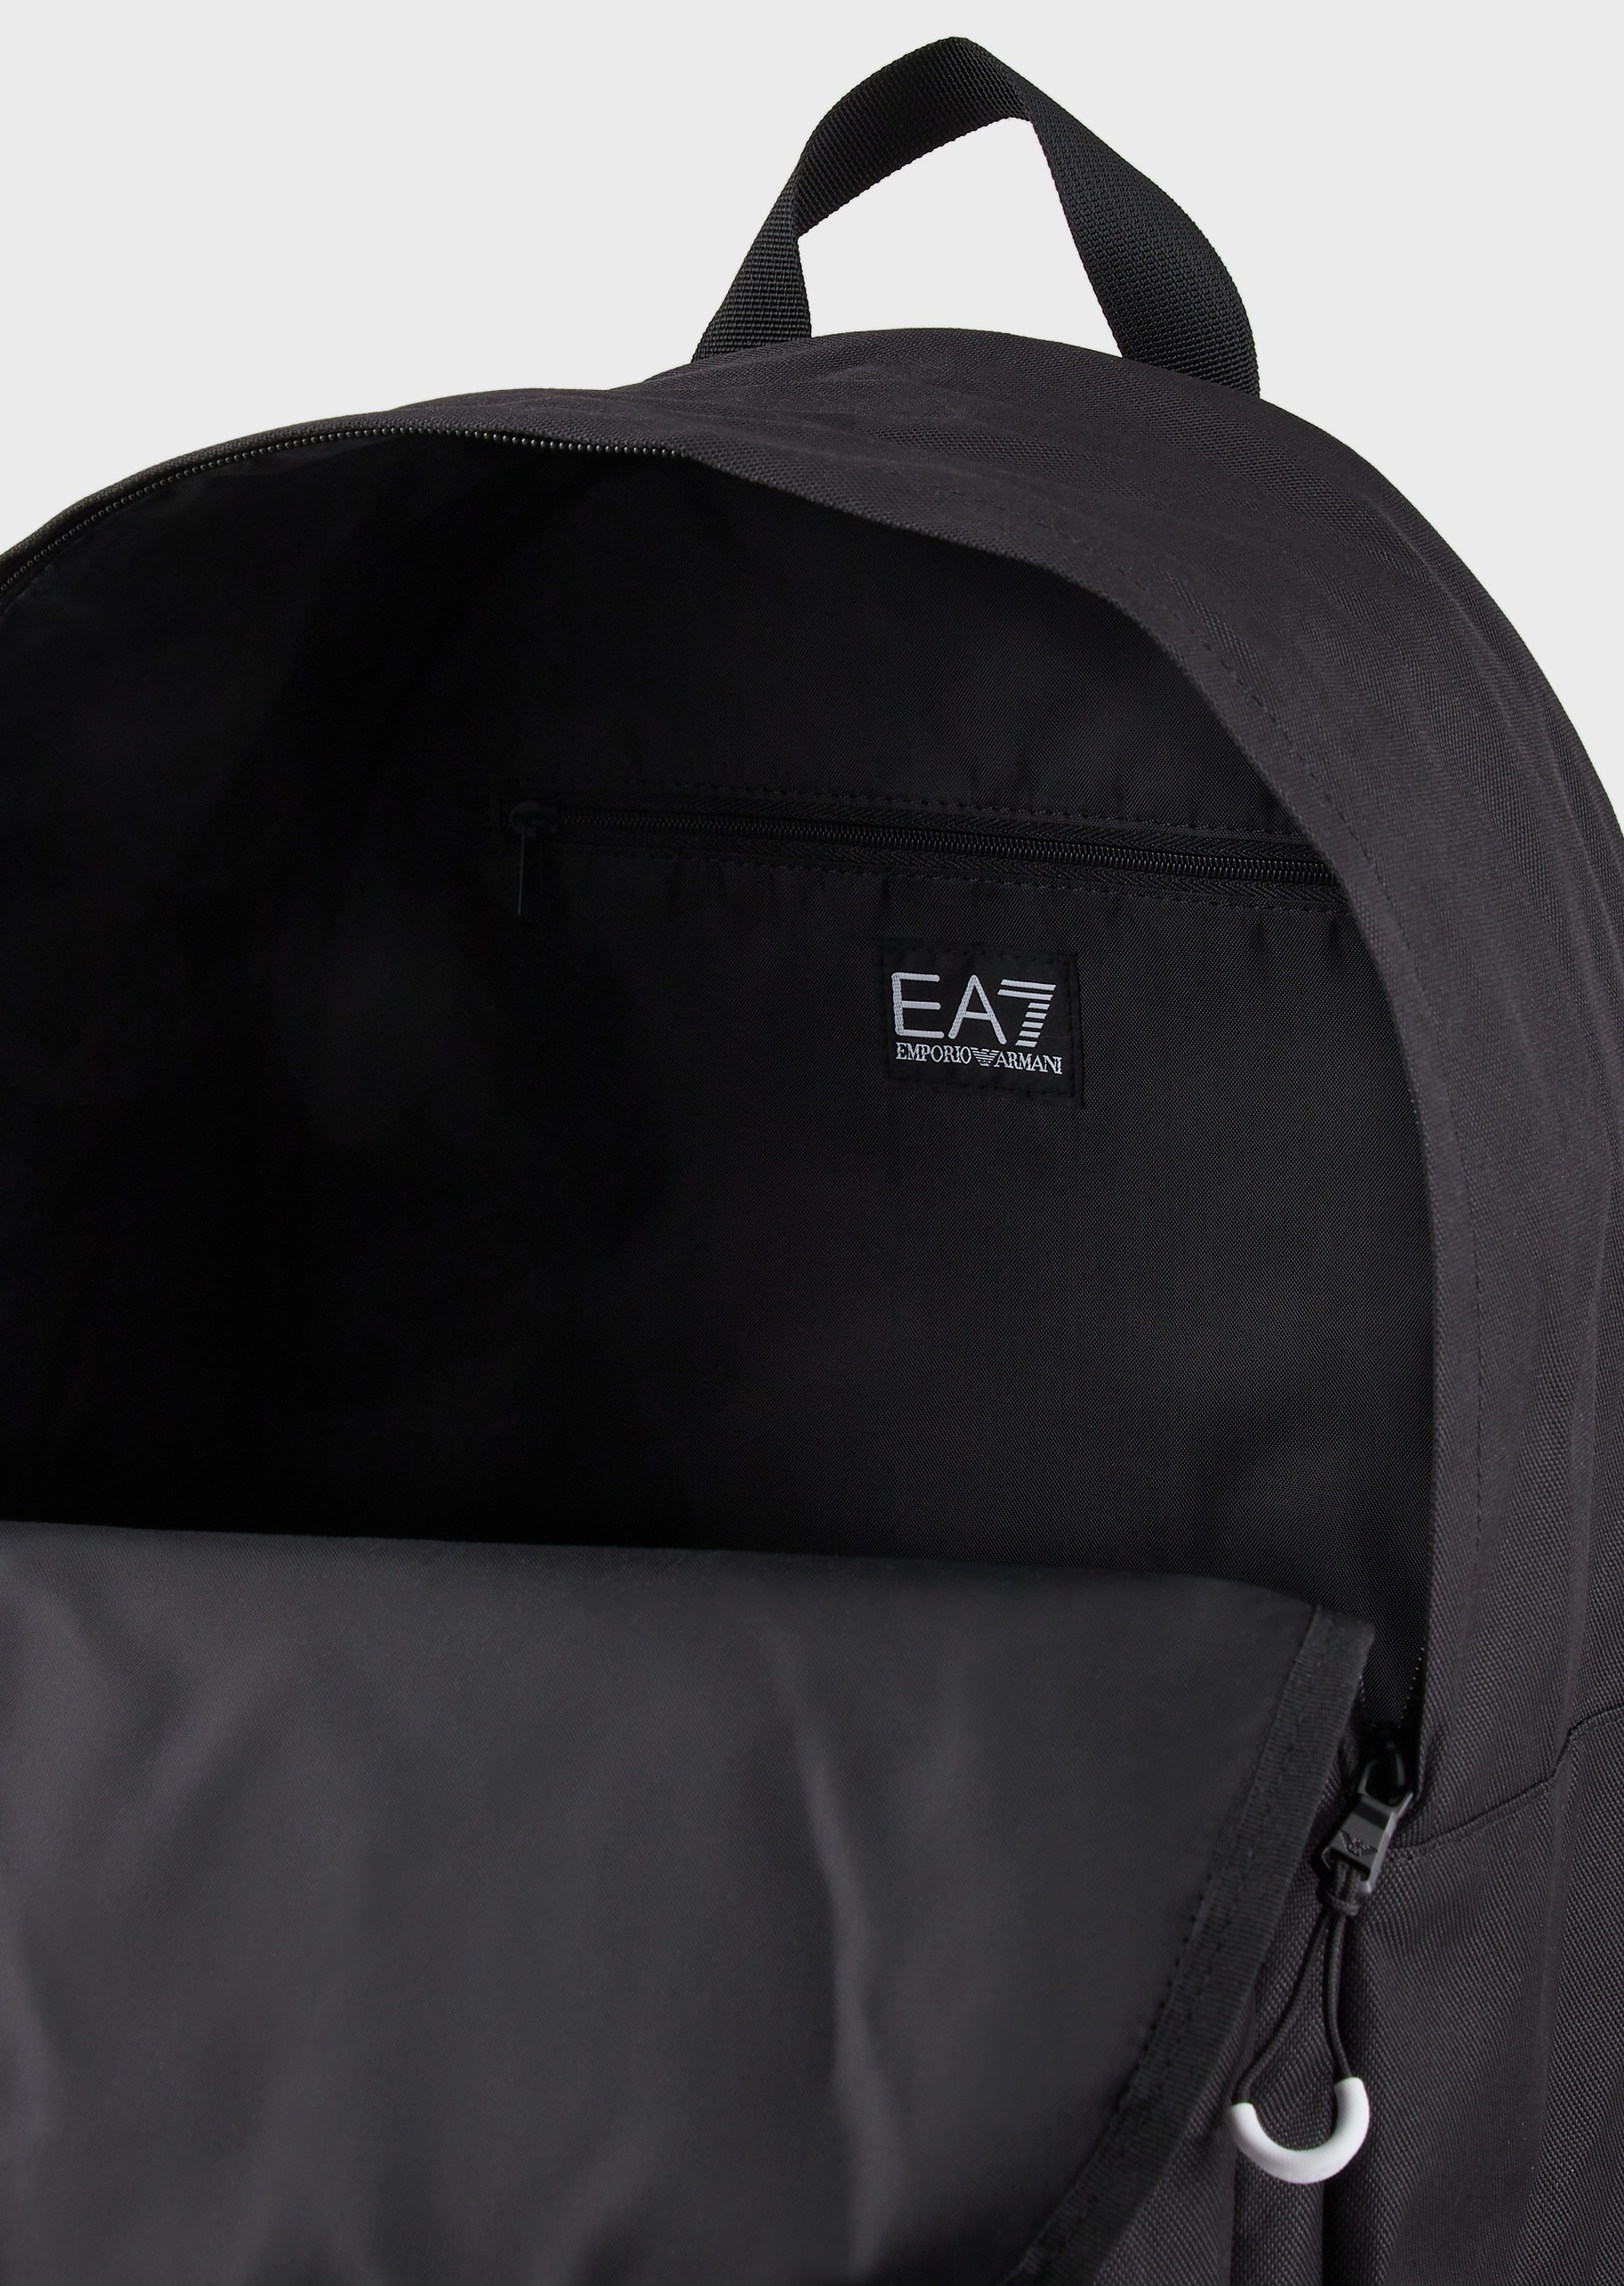 EA7 撞色印花标识双肩包